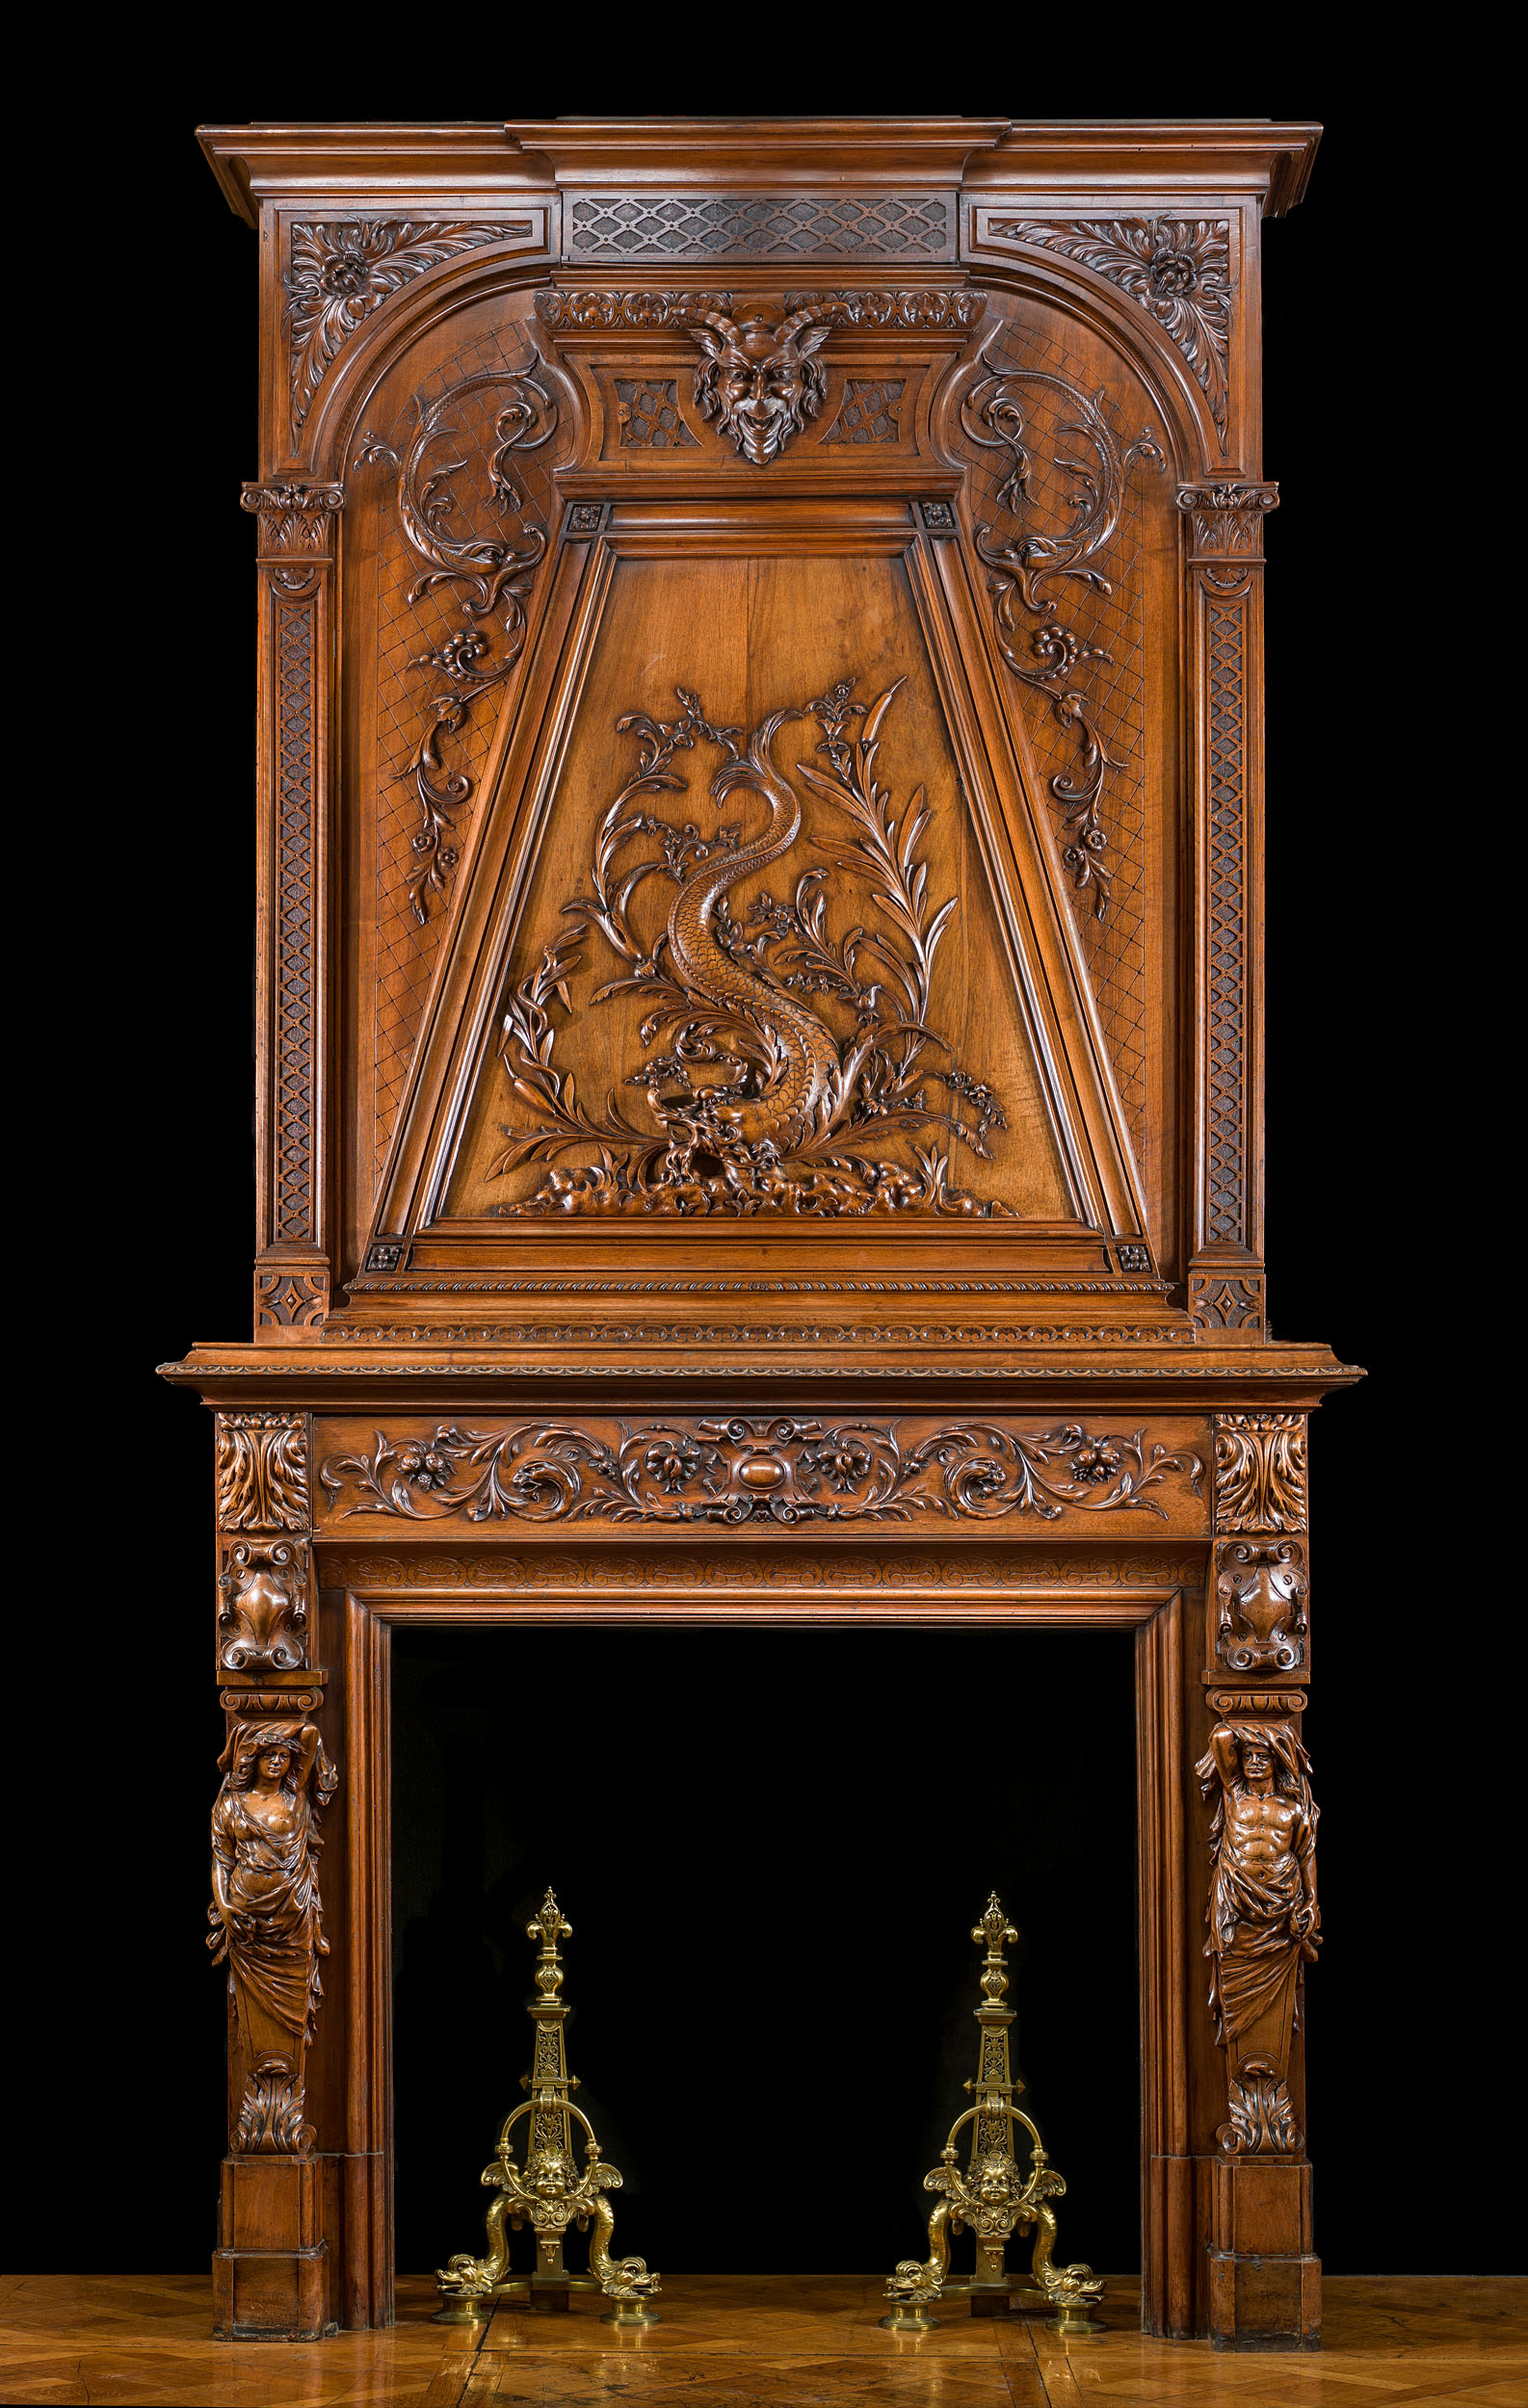  A tall French Carved Walnut Wood Trumeau Fireplace   